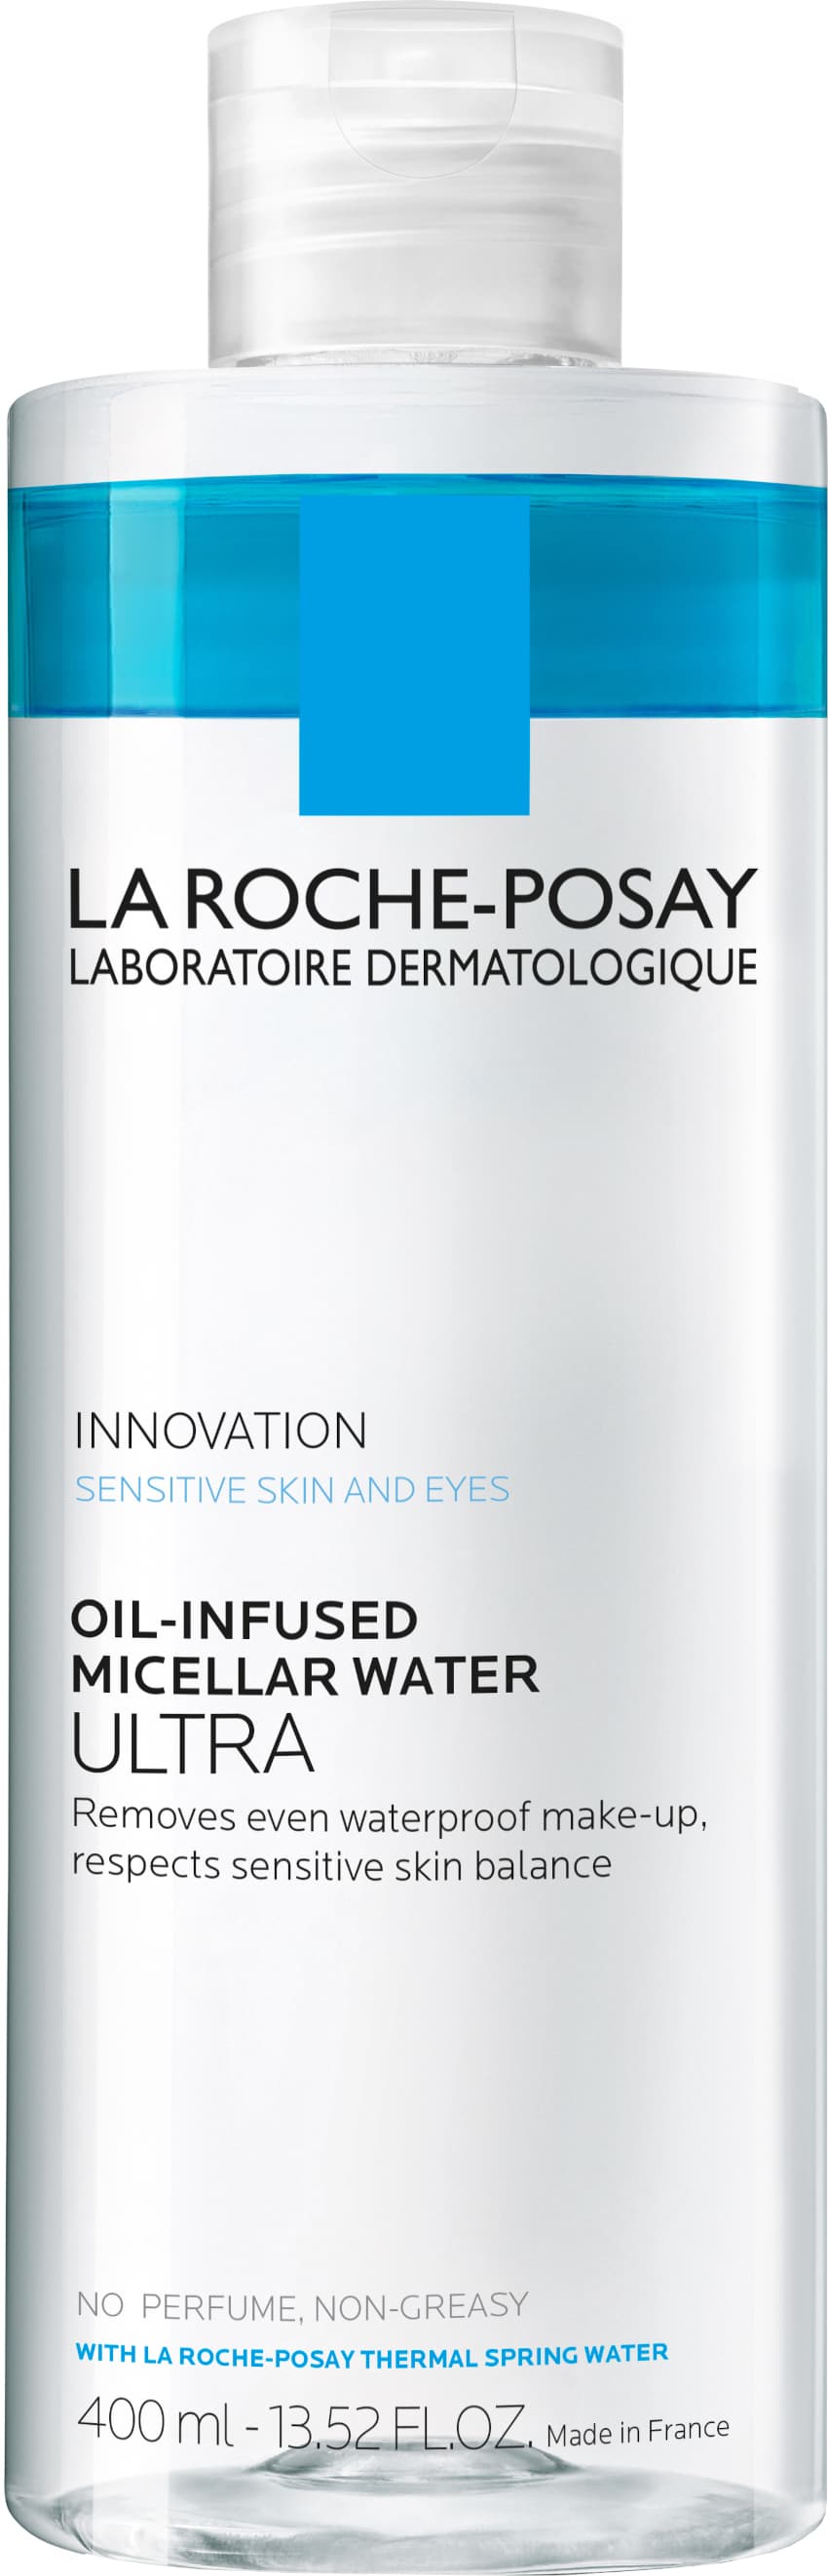 La Roche-Posay Dvojfázová micelárna voda s olejom 400ml